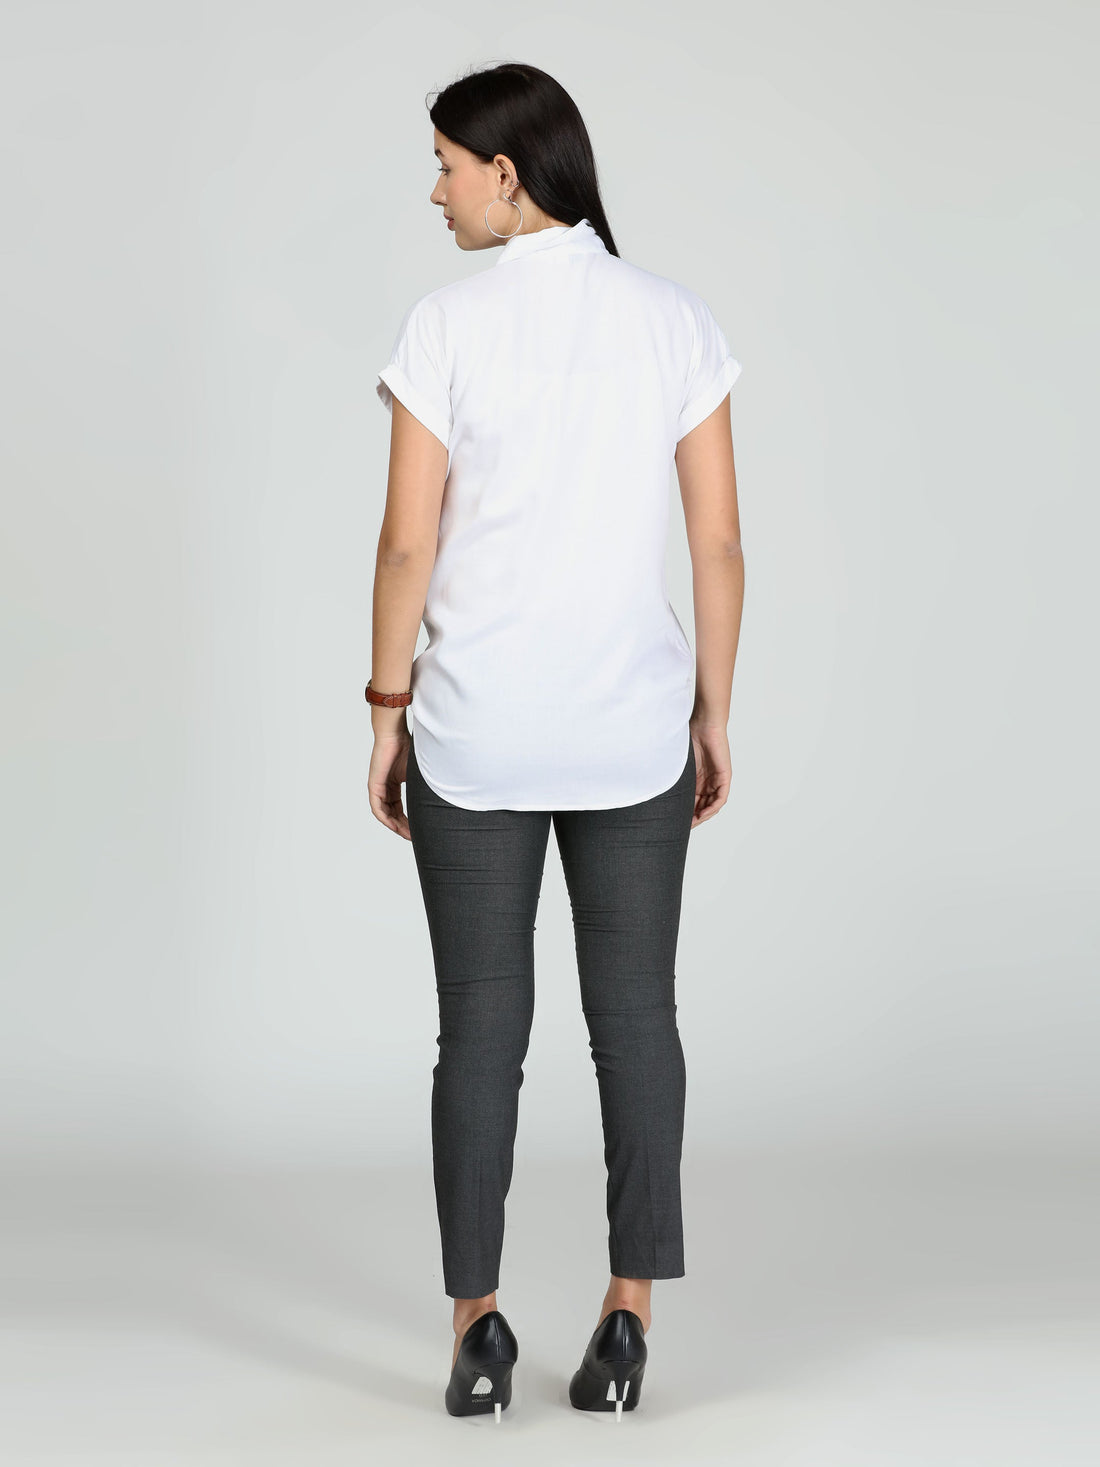 White Work-Wear Shirt